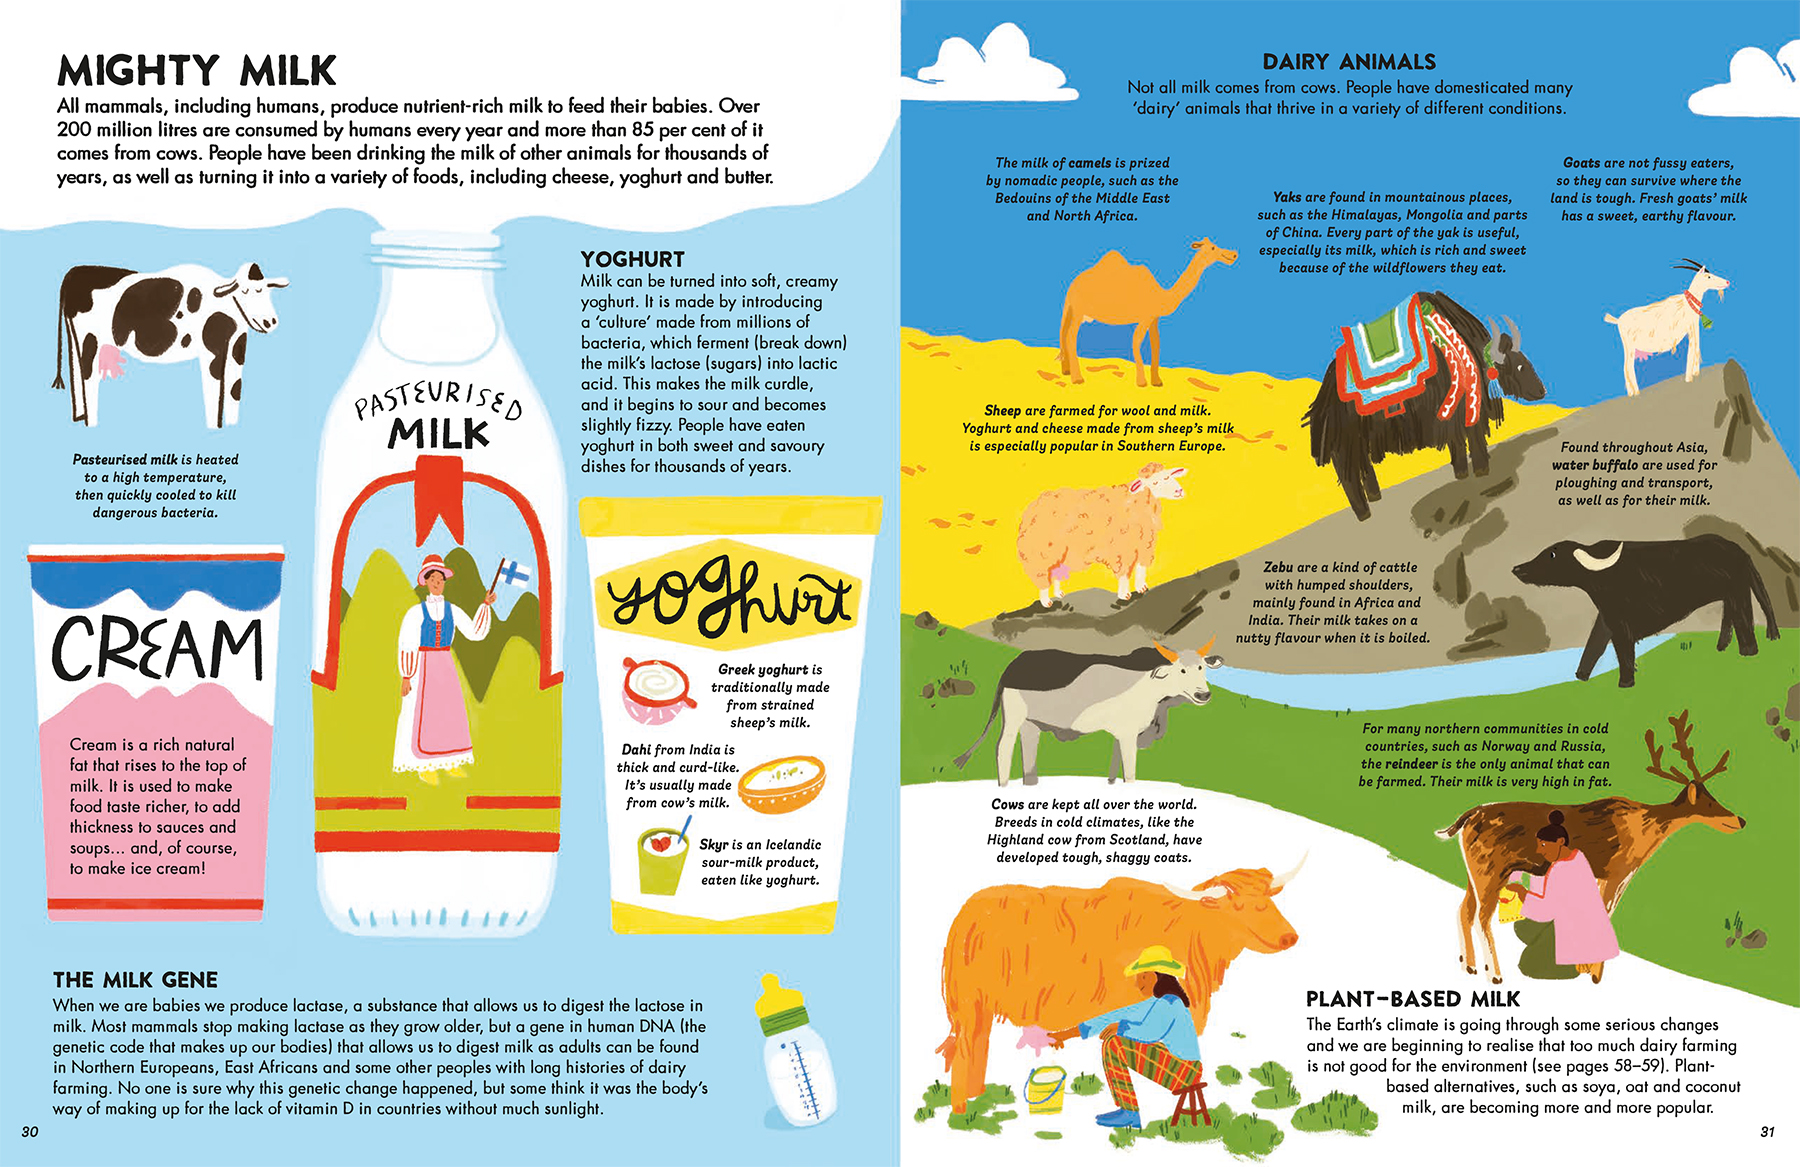 world-of-food-non-fiction-book-illustration-pasteurized-milk-cream-yoghurt-camels-sheep-yak-goat-water-buffalo-reindeer-cow-violeta-noy